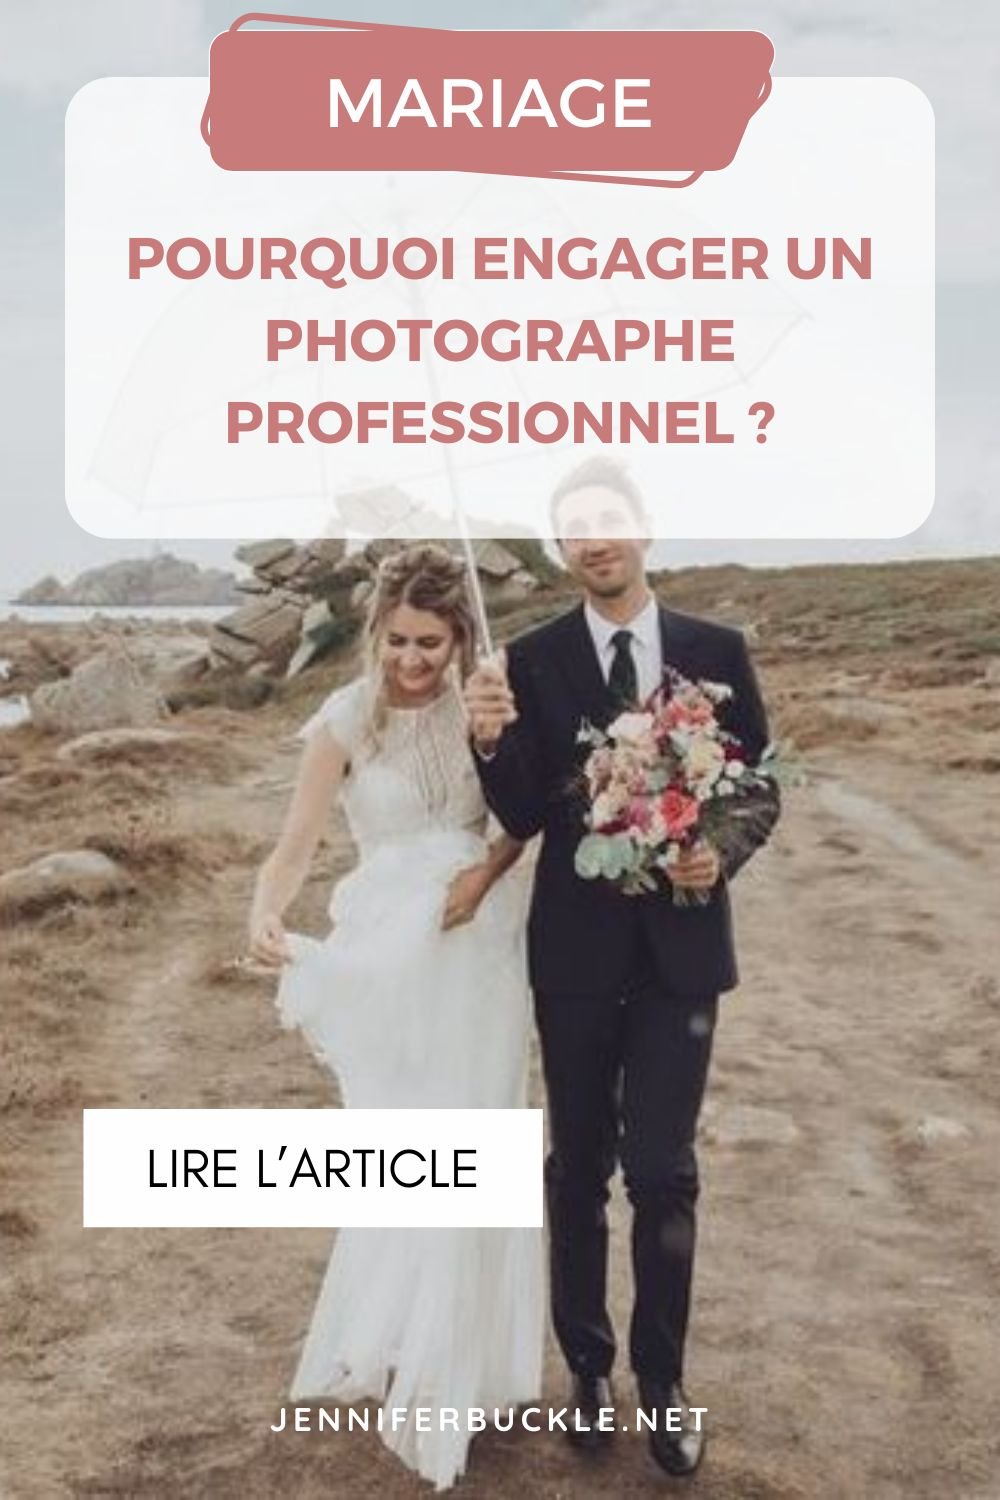 Jennifer Buckle photographe mariage professionnel pourquoi engager un photographe mariage professionnel 2.jpg